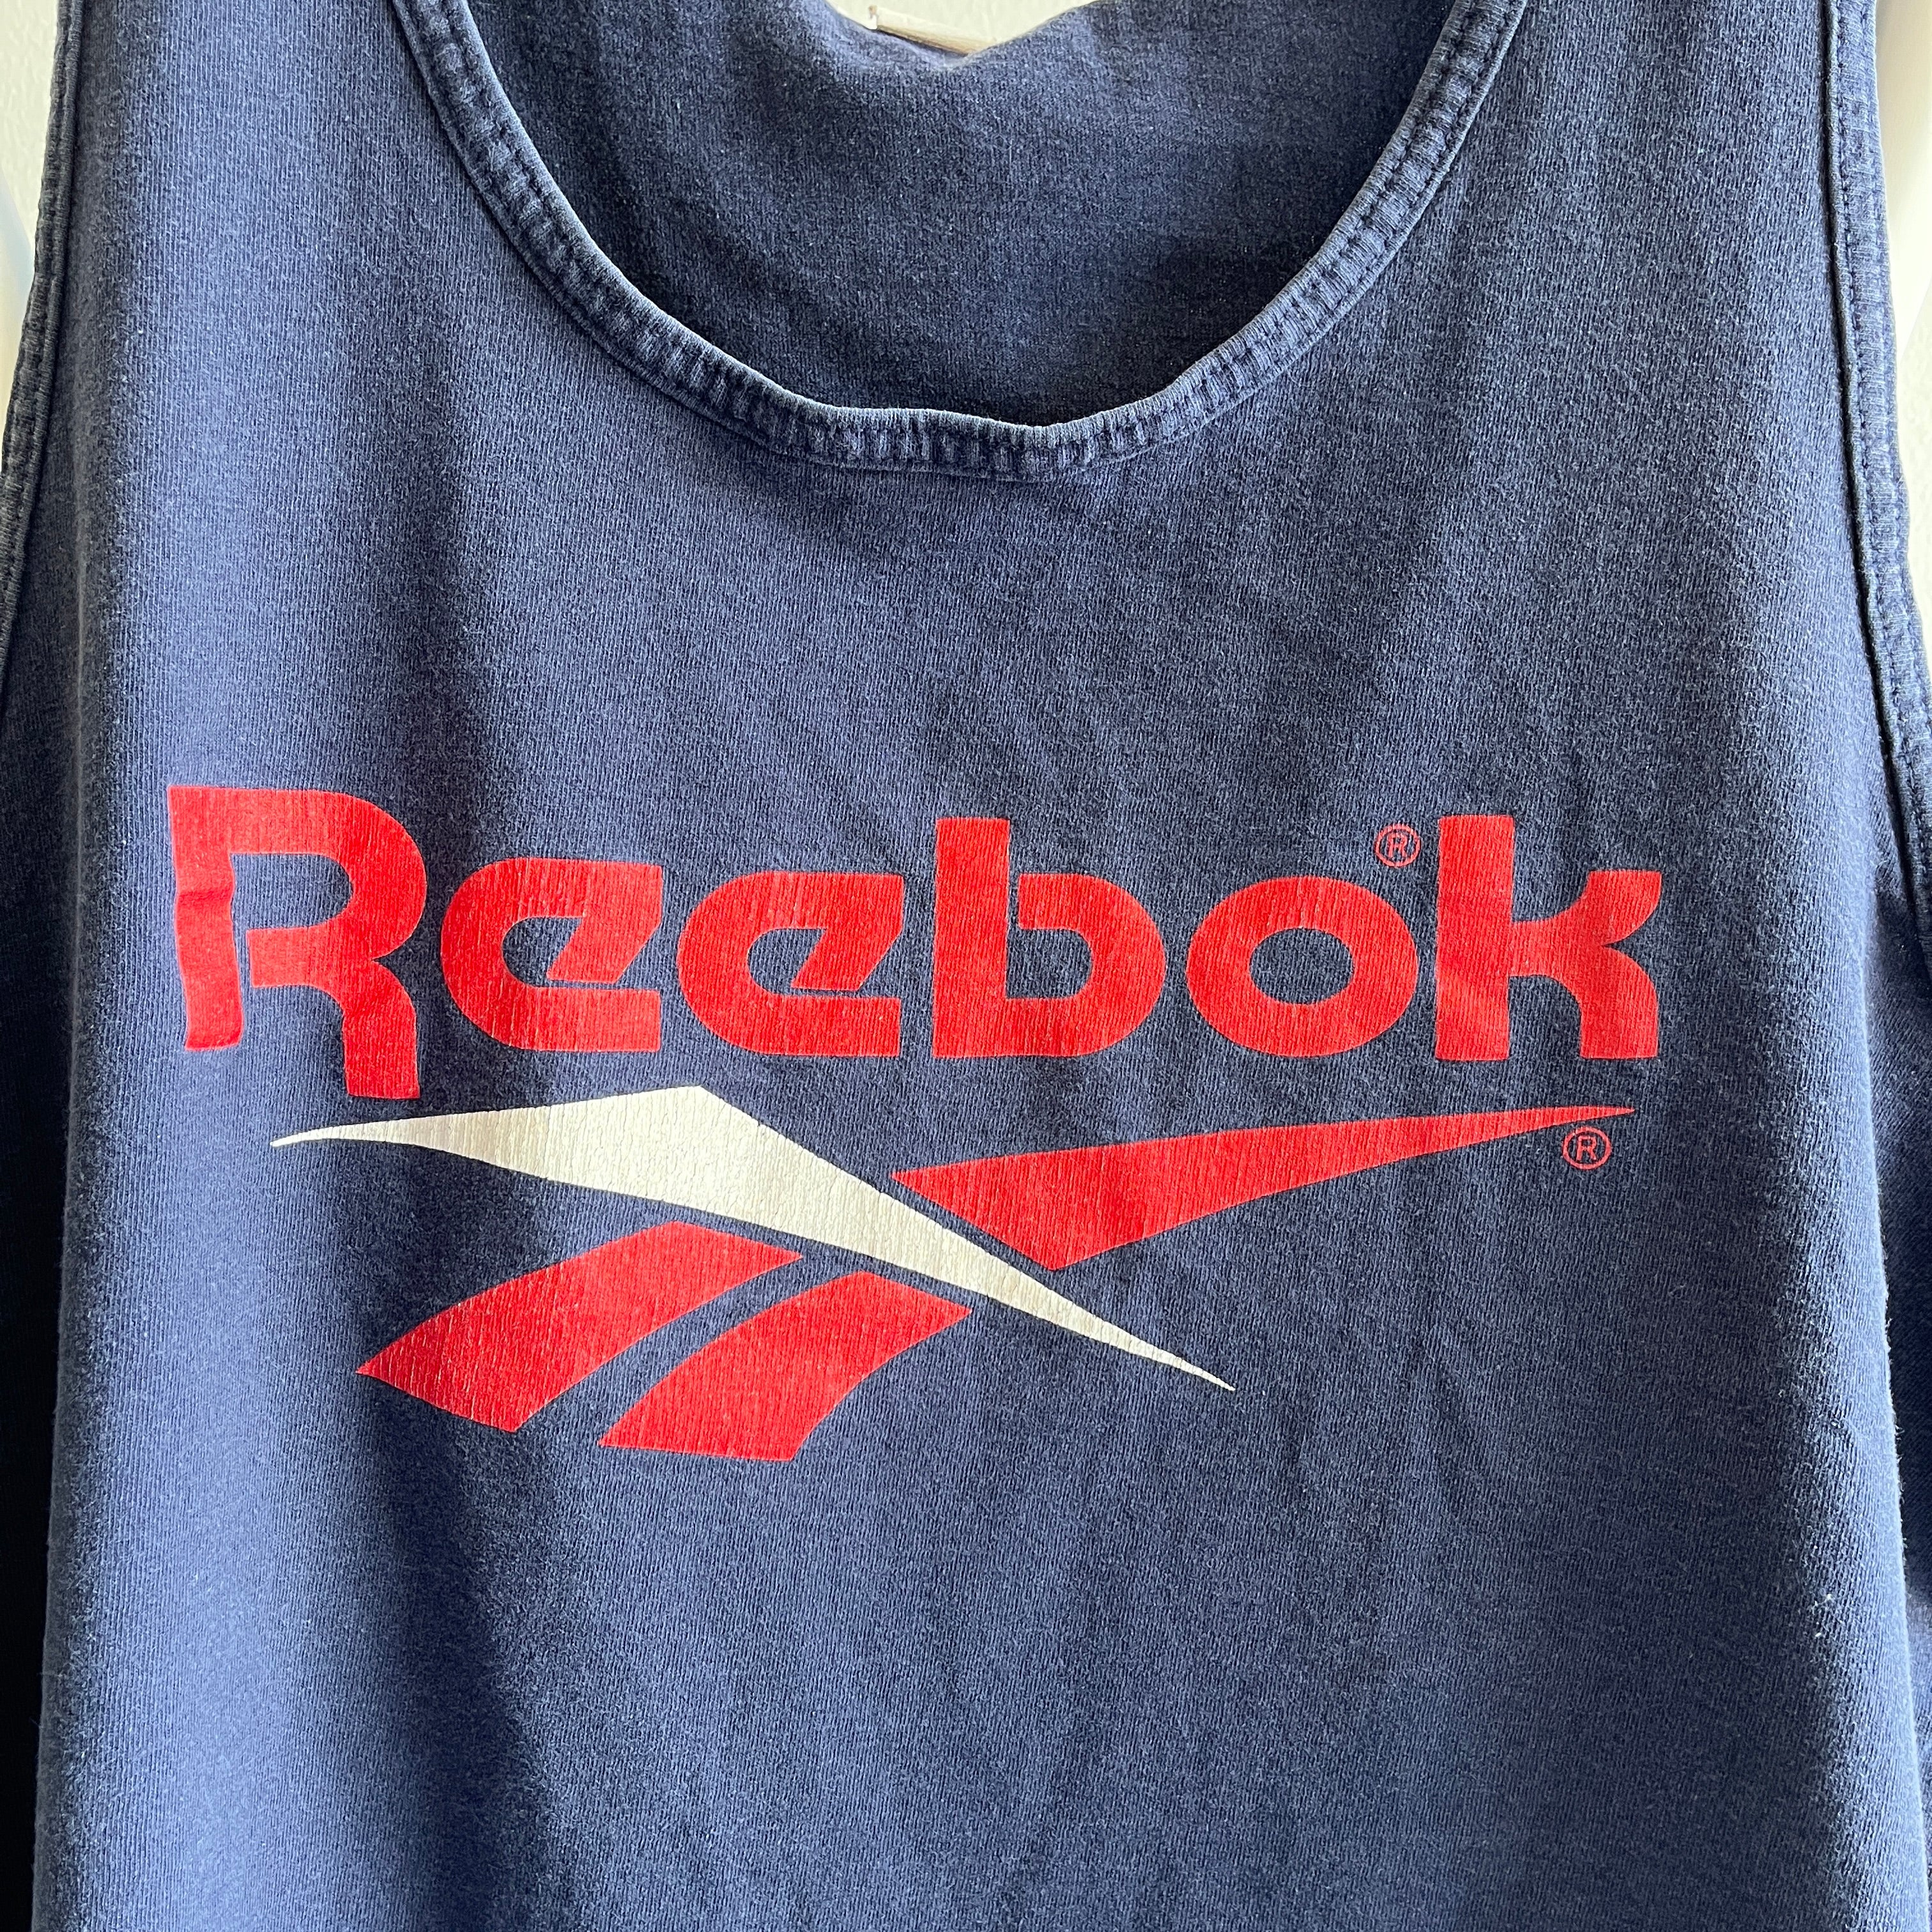 1990s USA Made Reebok Cotton Graphic Tank Top